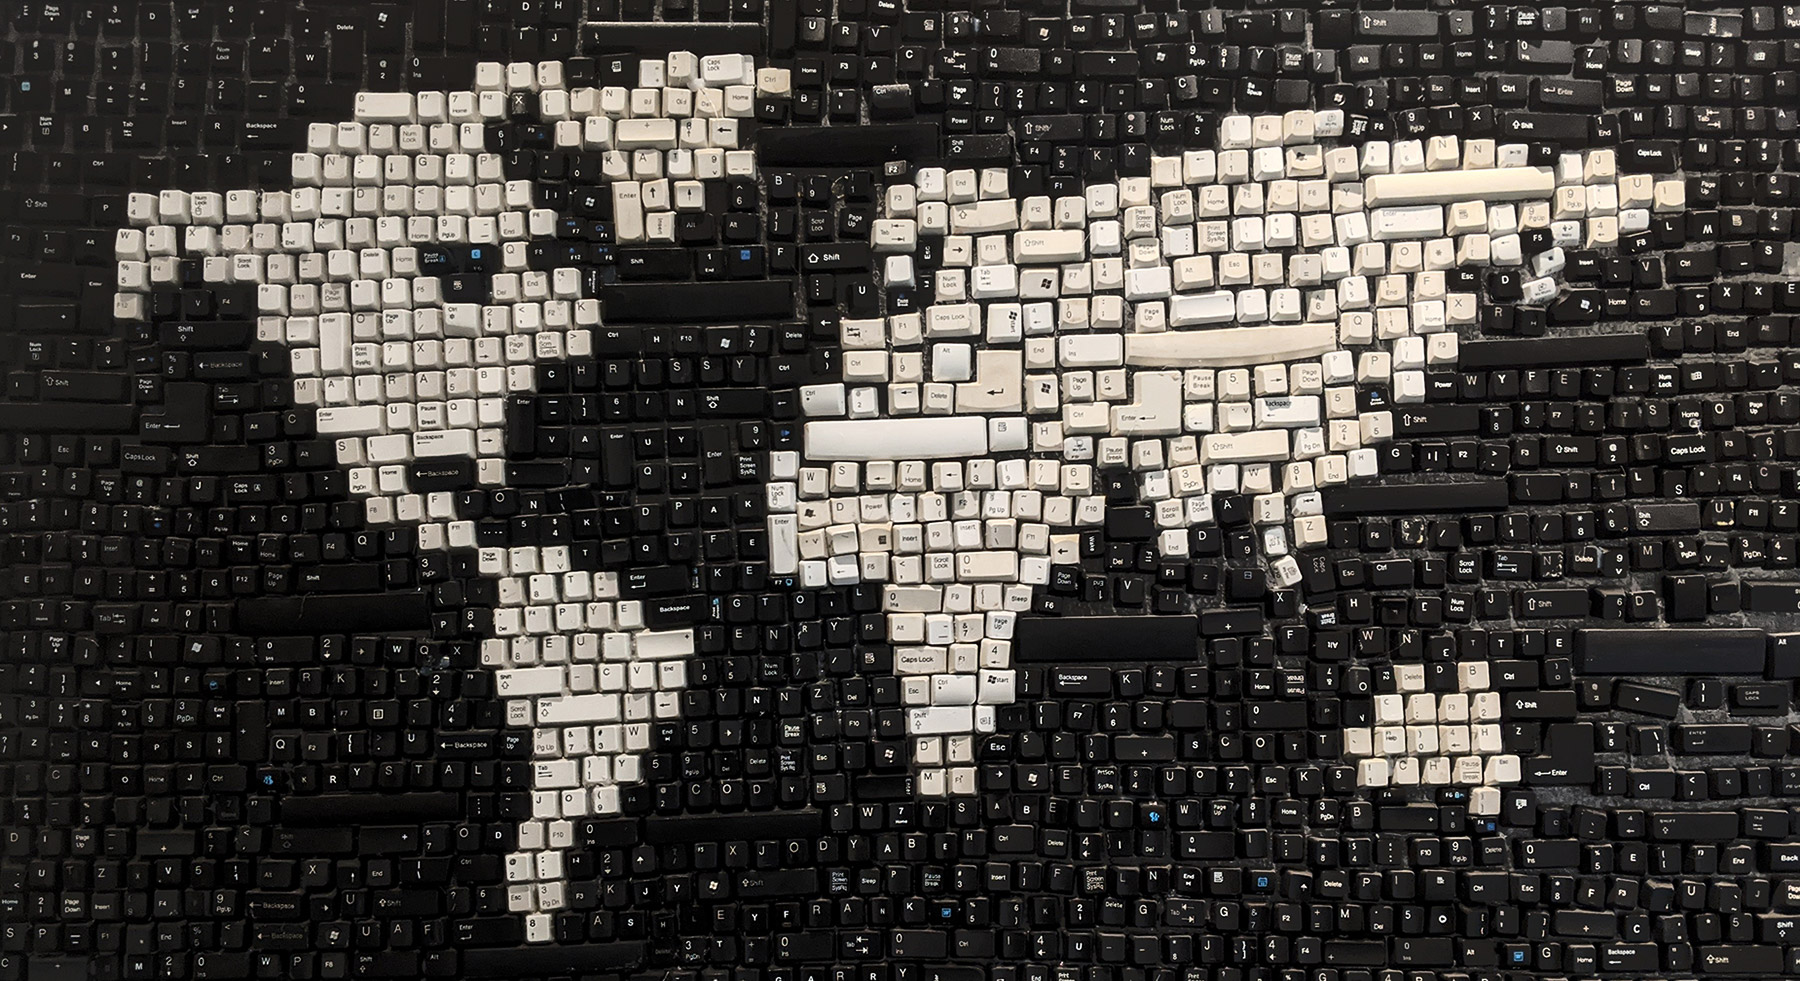 World map made with keyboard keys